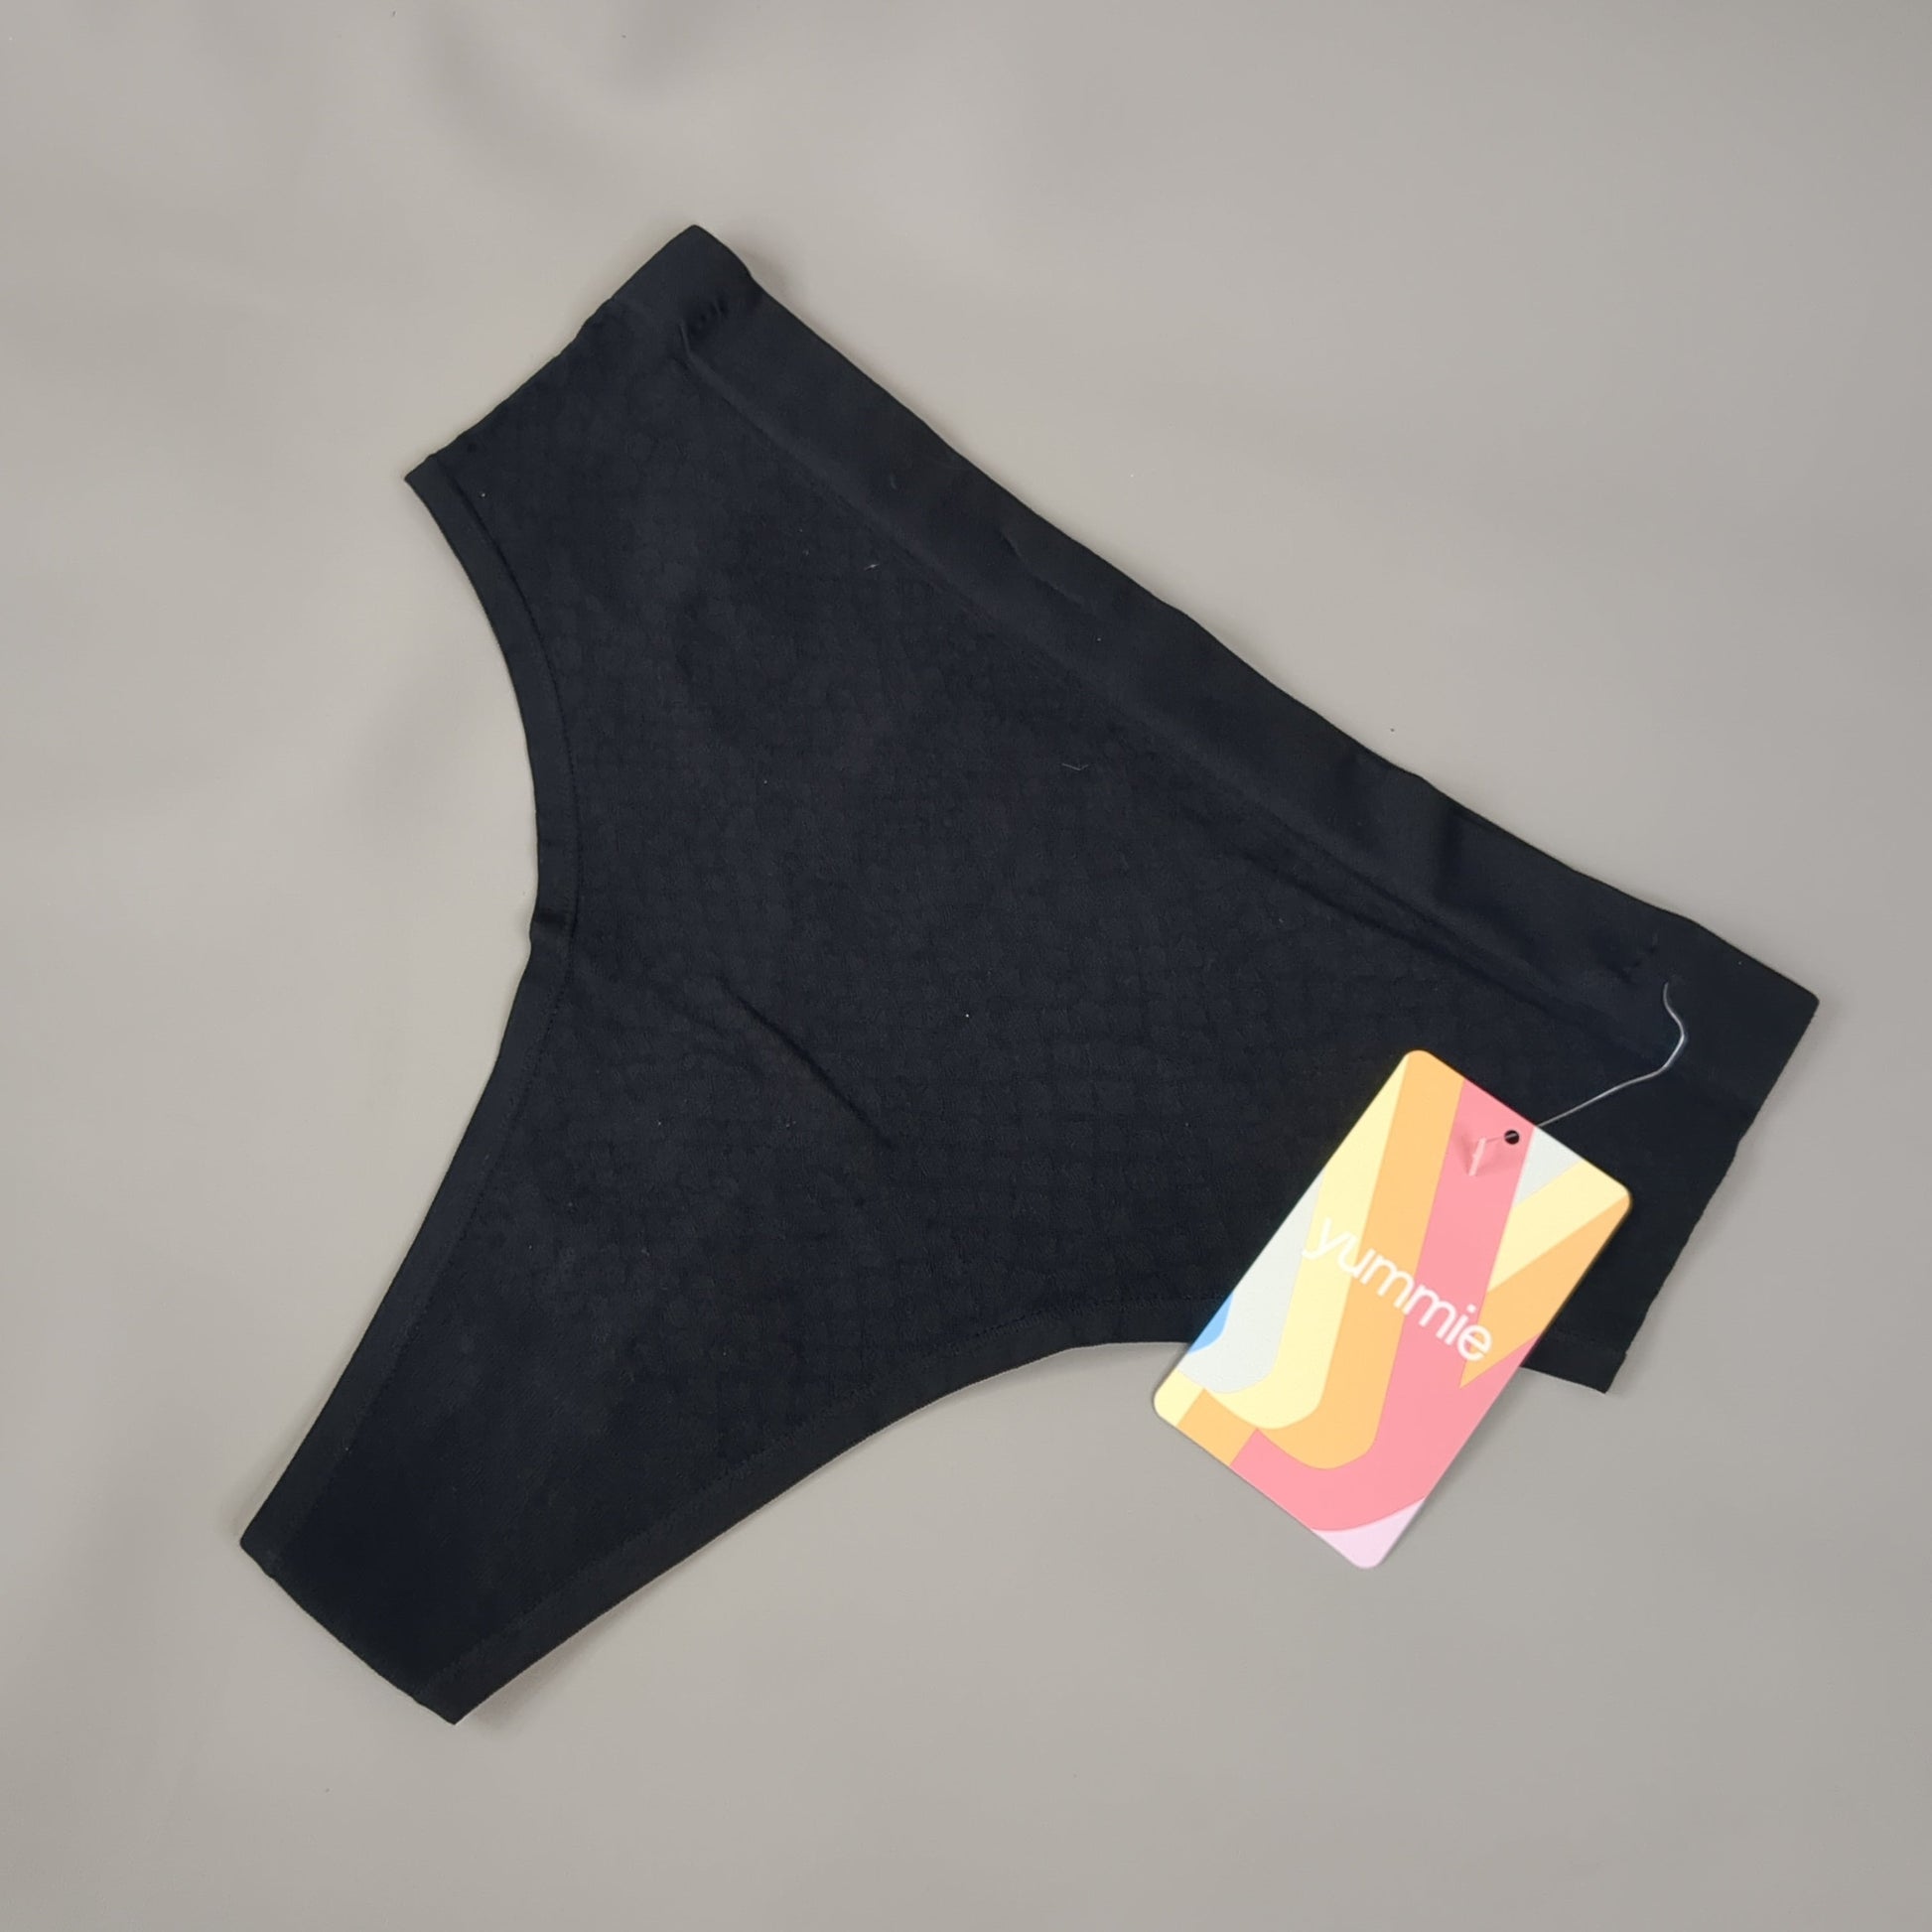 YUMMIE Amber Mid Waist Thong Women's Underwear Sz L/XL Black YT5-296 (New)